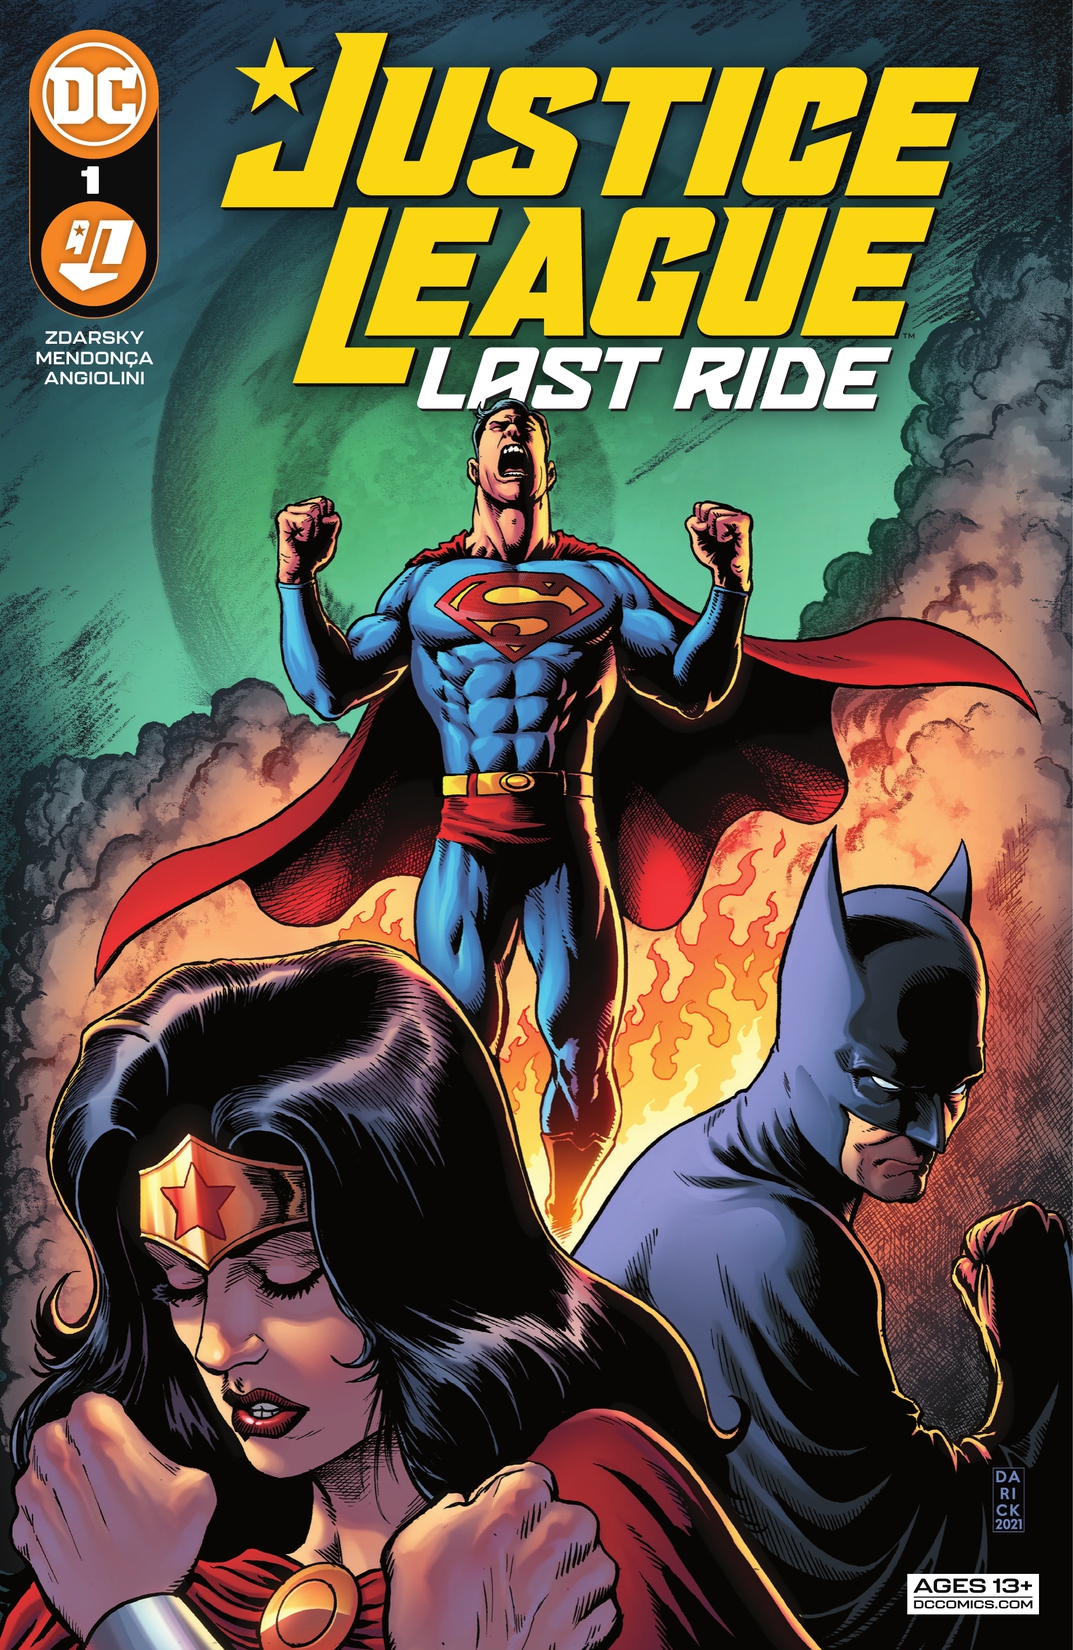 Justice League: Last Ride #1 preview images